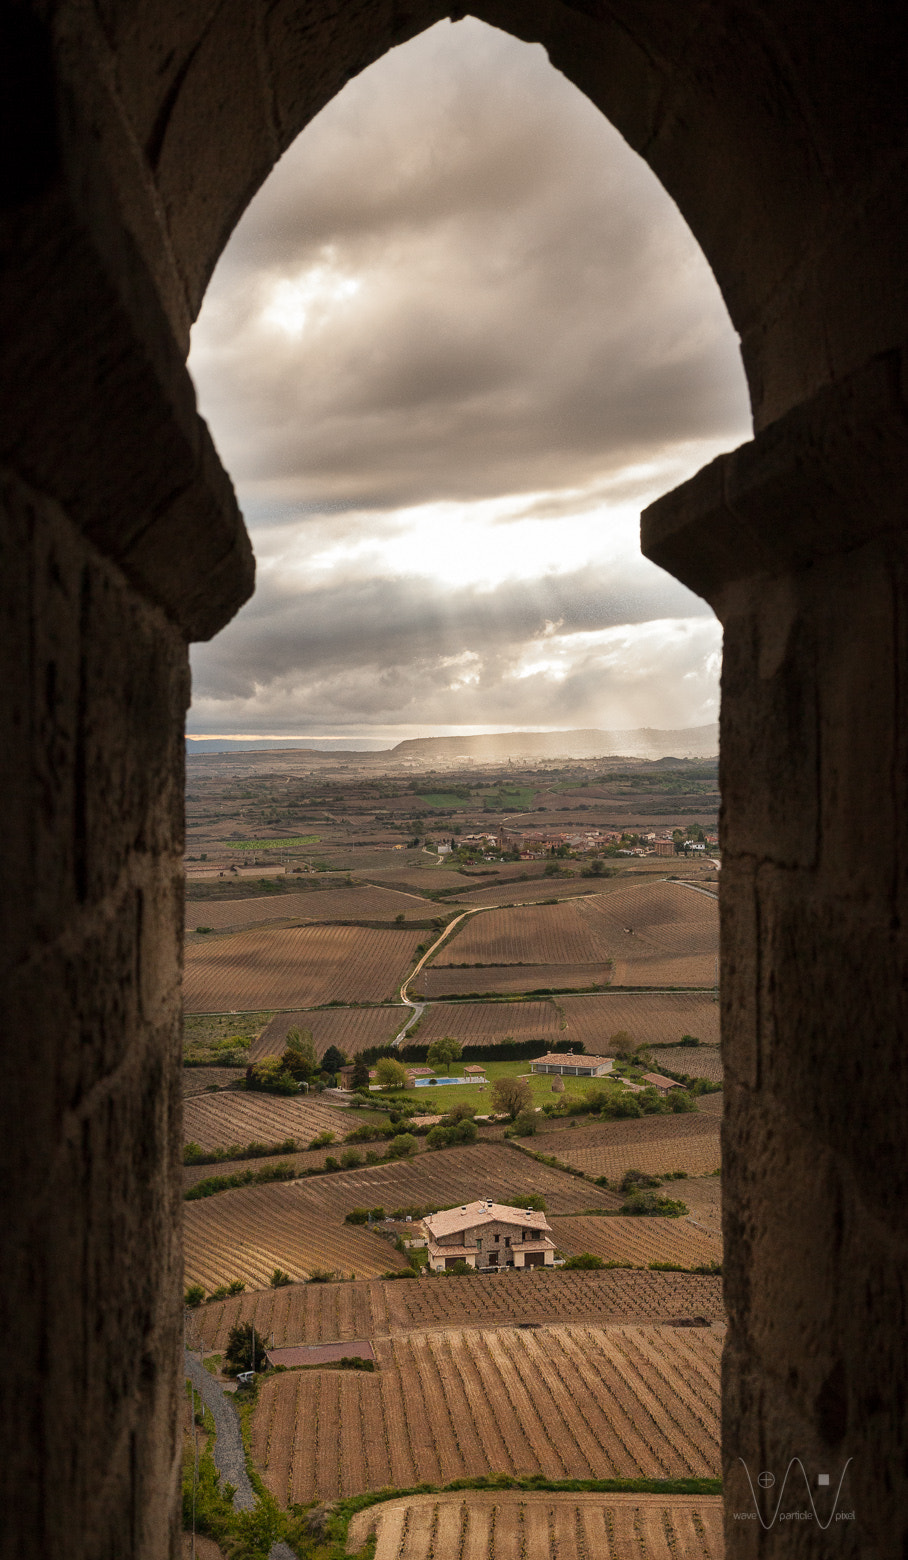 The Window to La Rioja